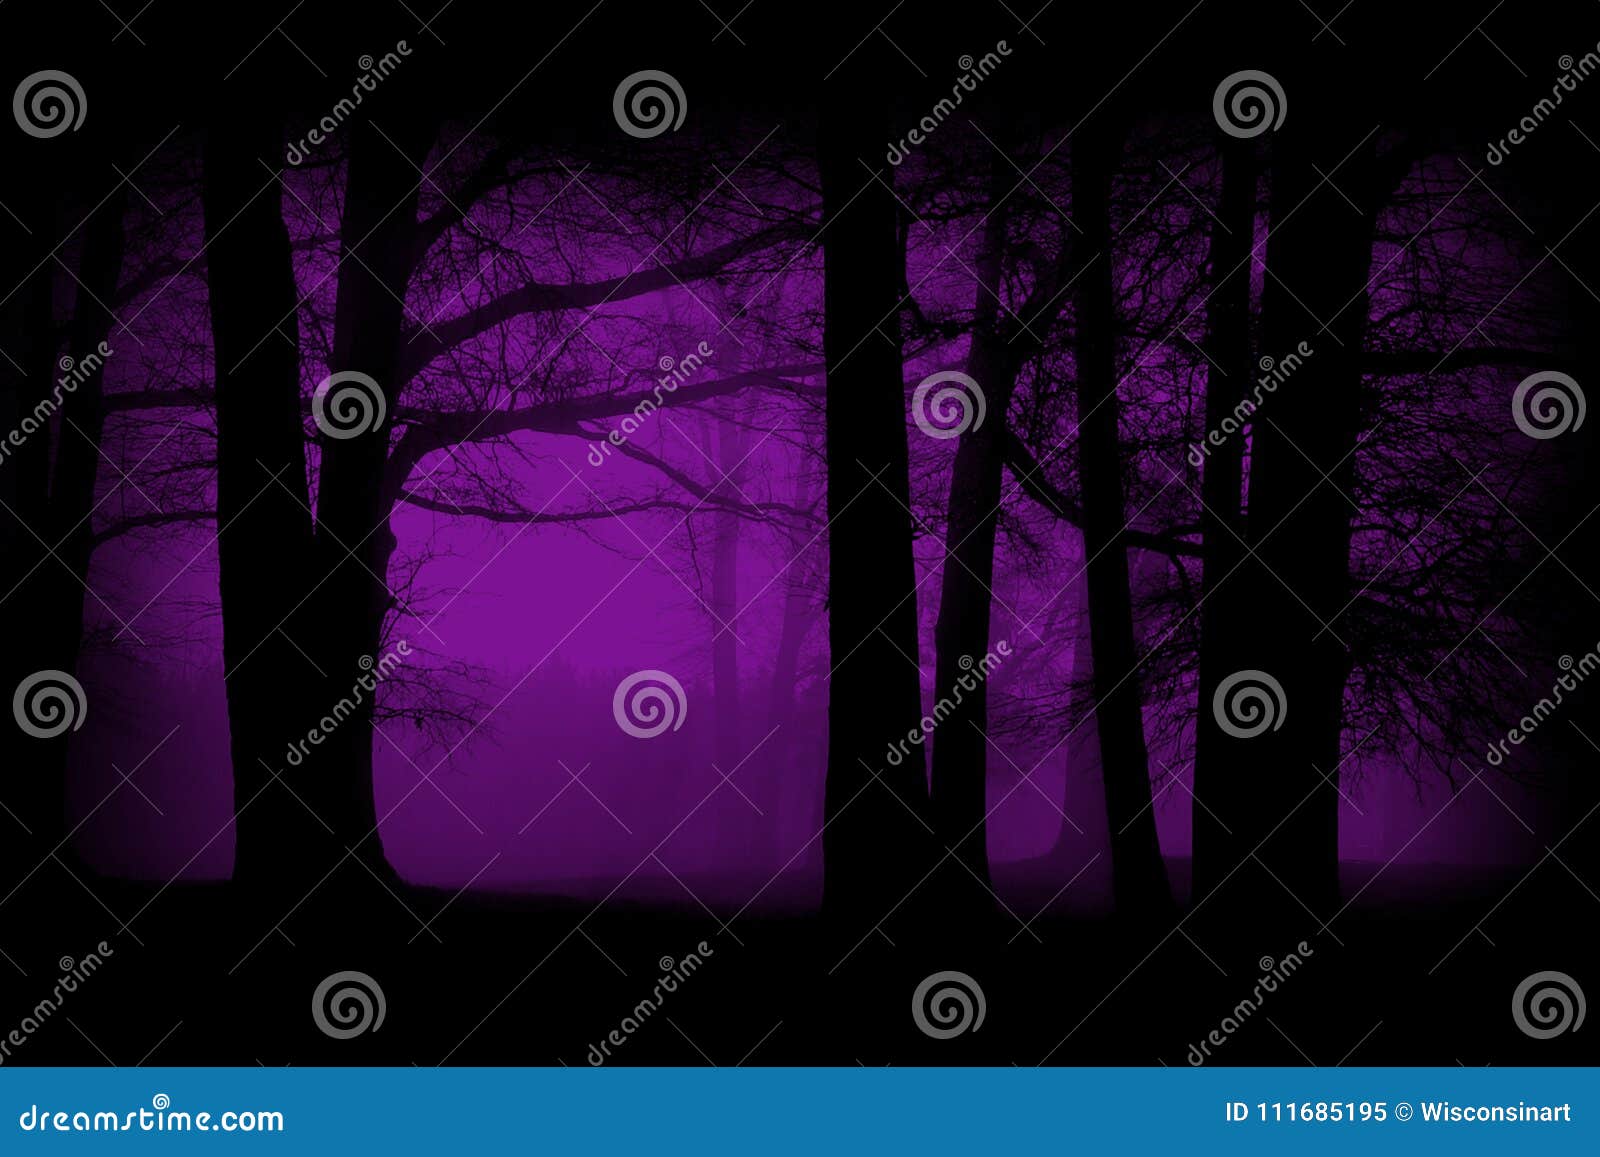 purple, violet woods, forest background